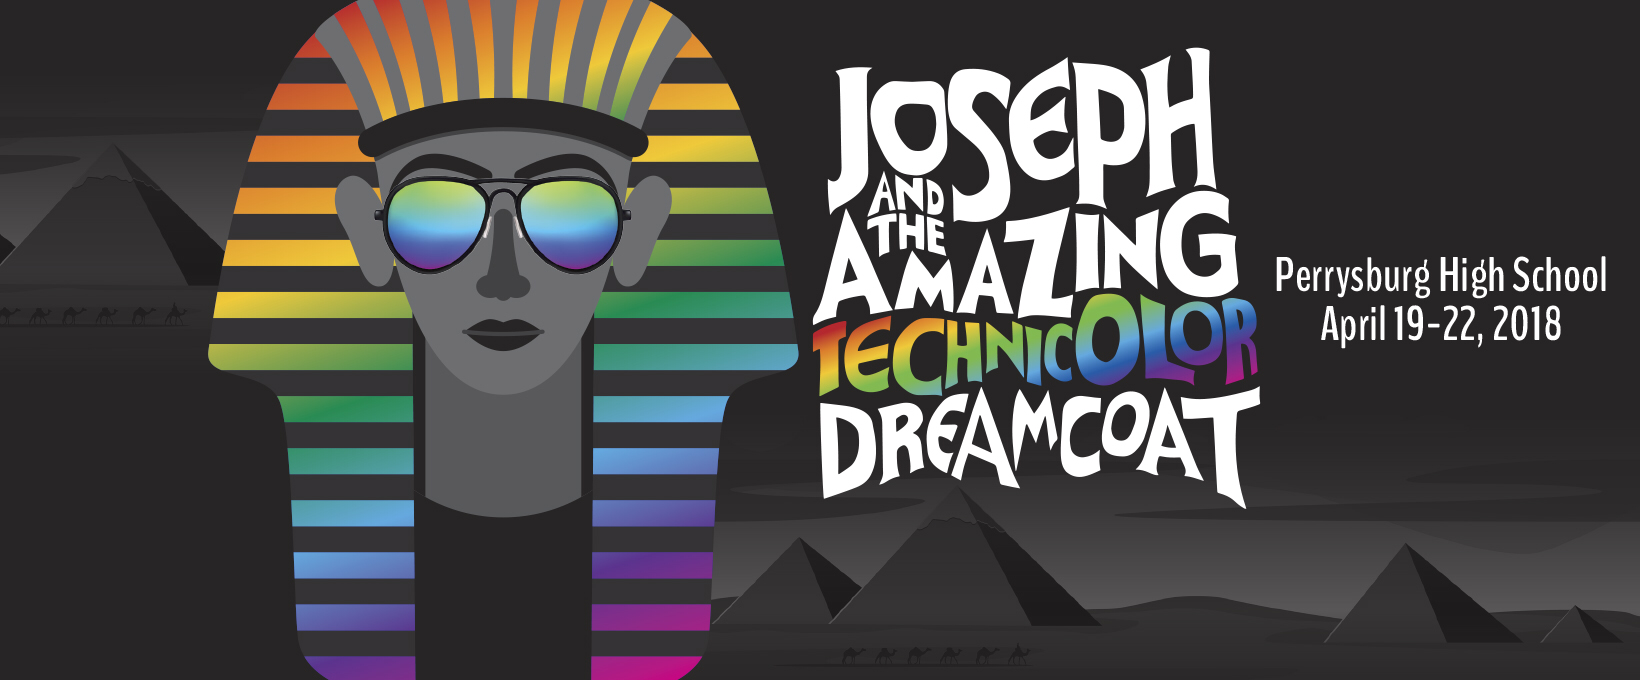 Go Go Go see Joseph and the Amazing Technicolor Dreamcoat!